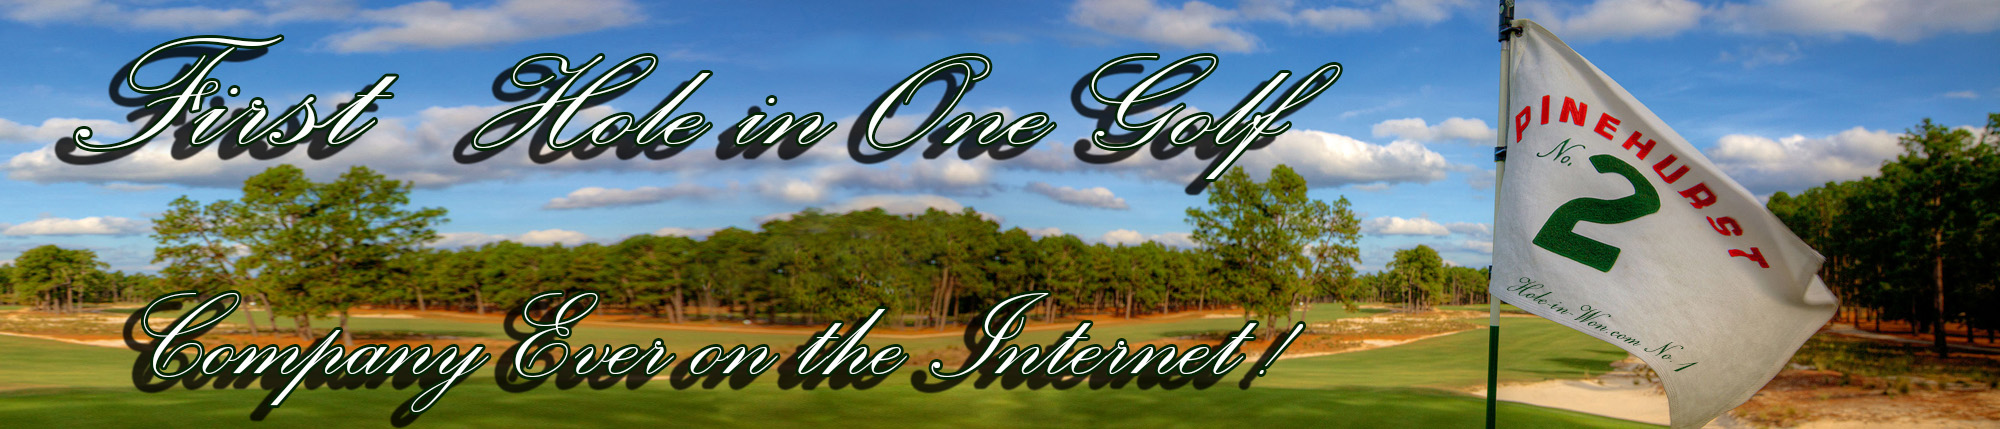 Pinehurst Golf Contest Ideas